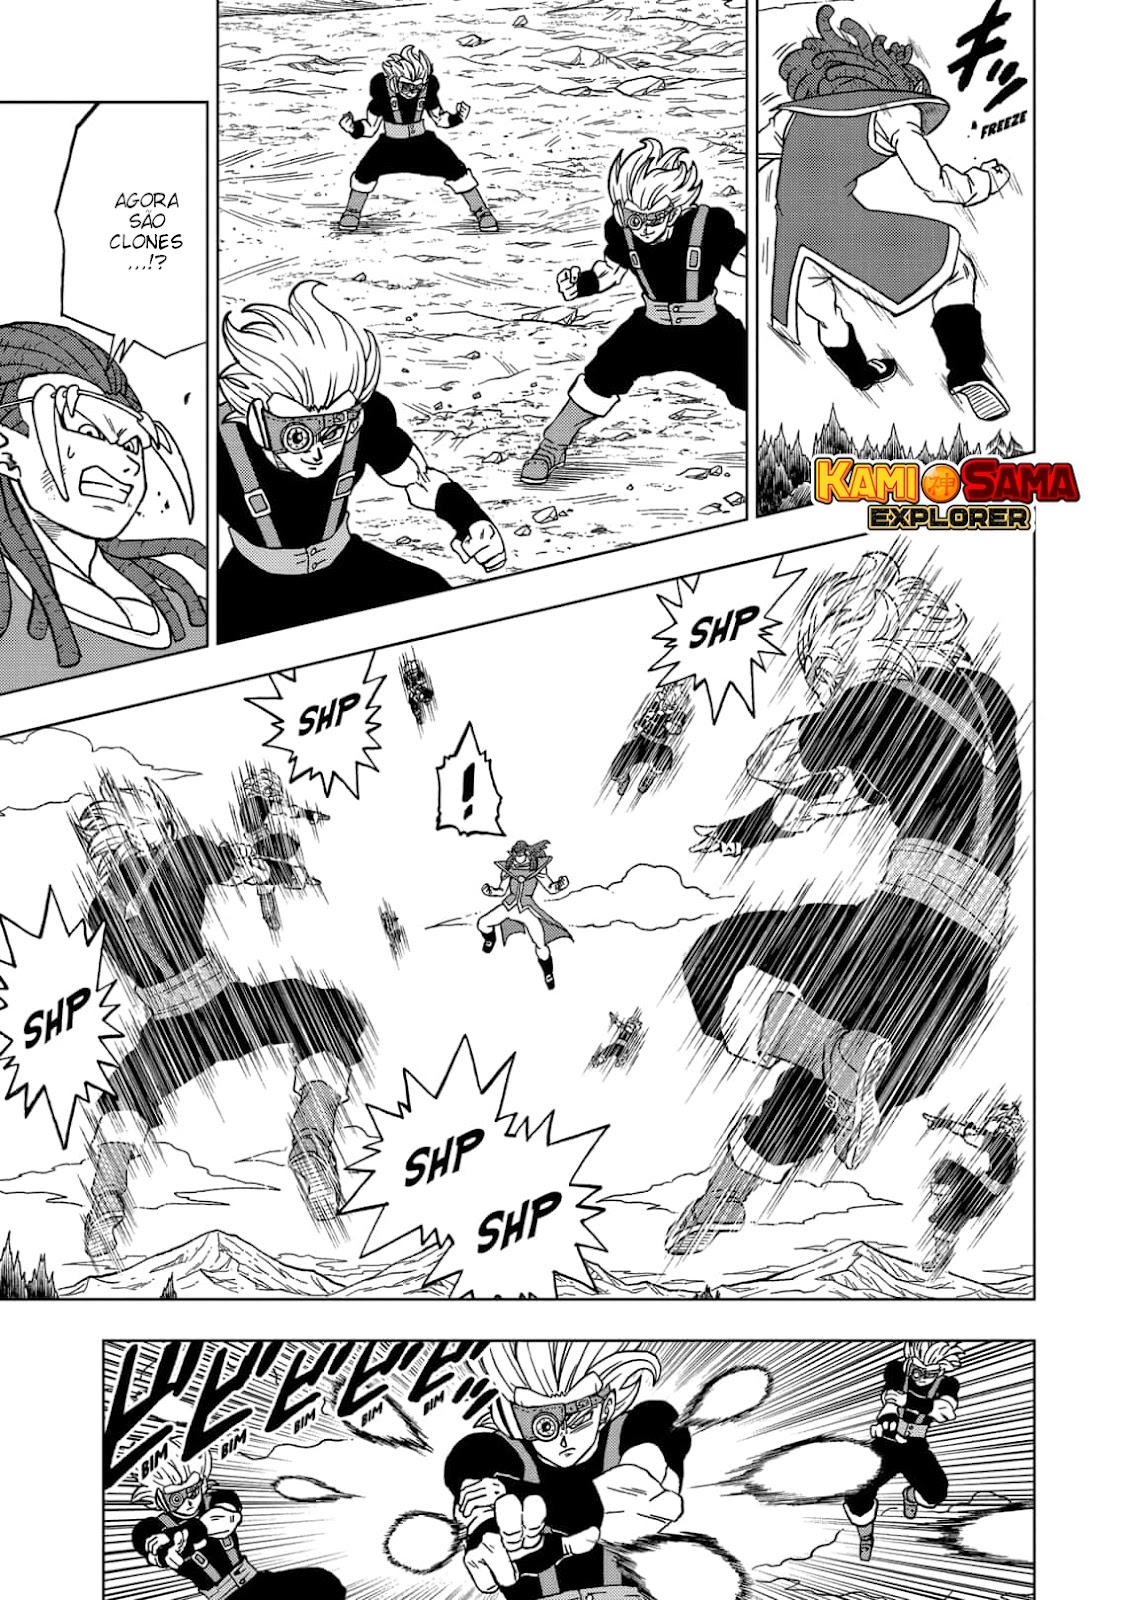 Dragon Ball Super Capítulo 80 - Manga Online